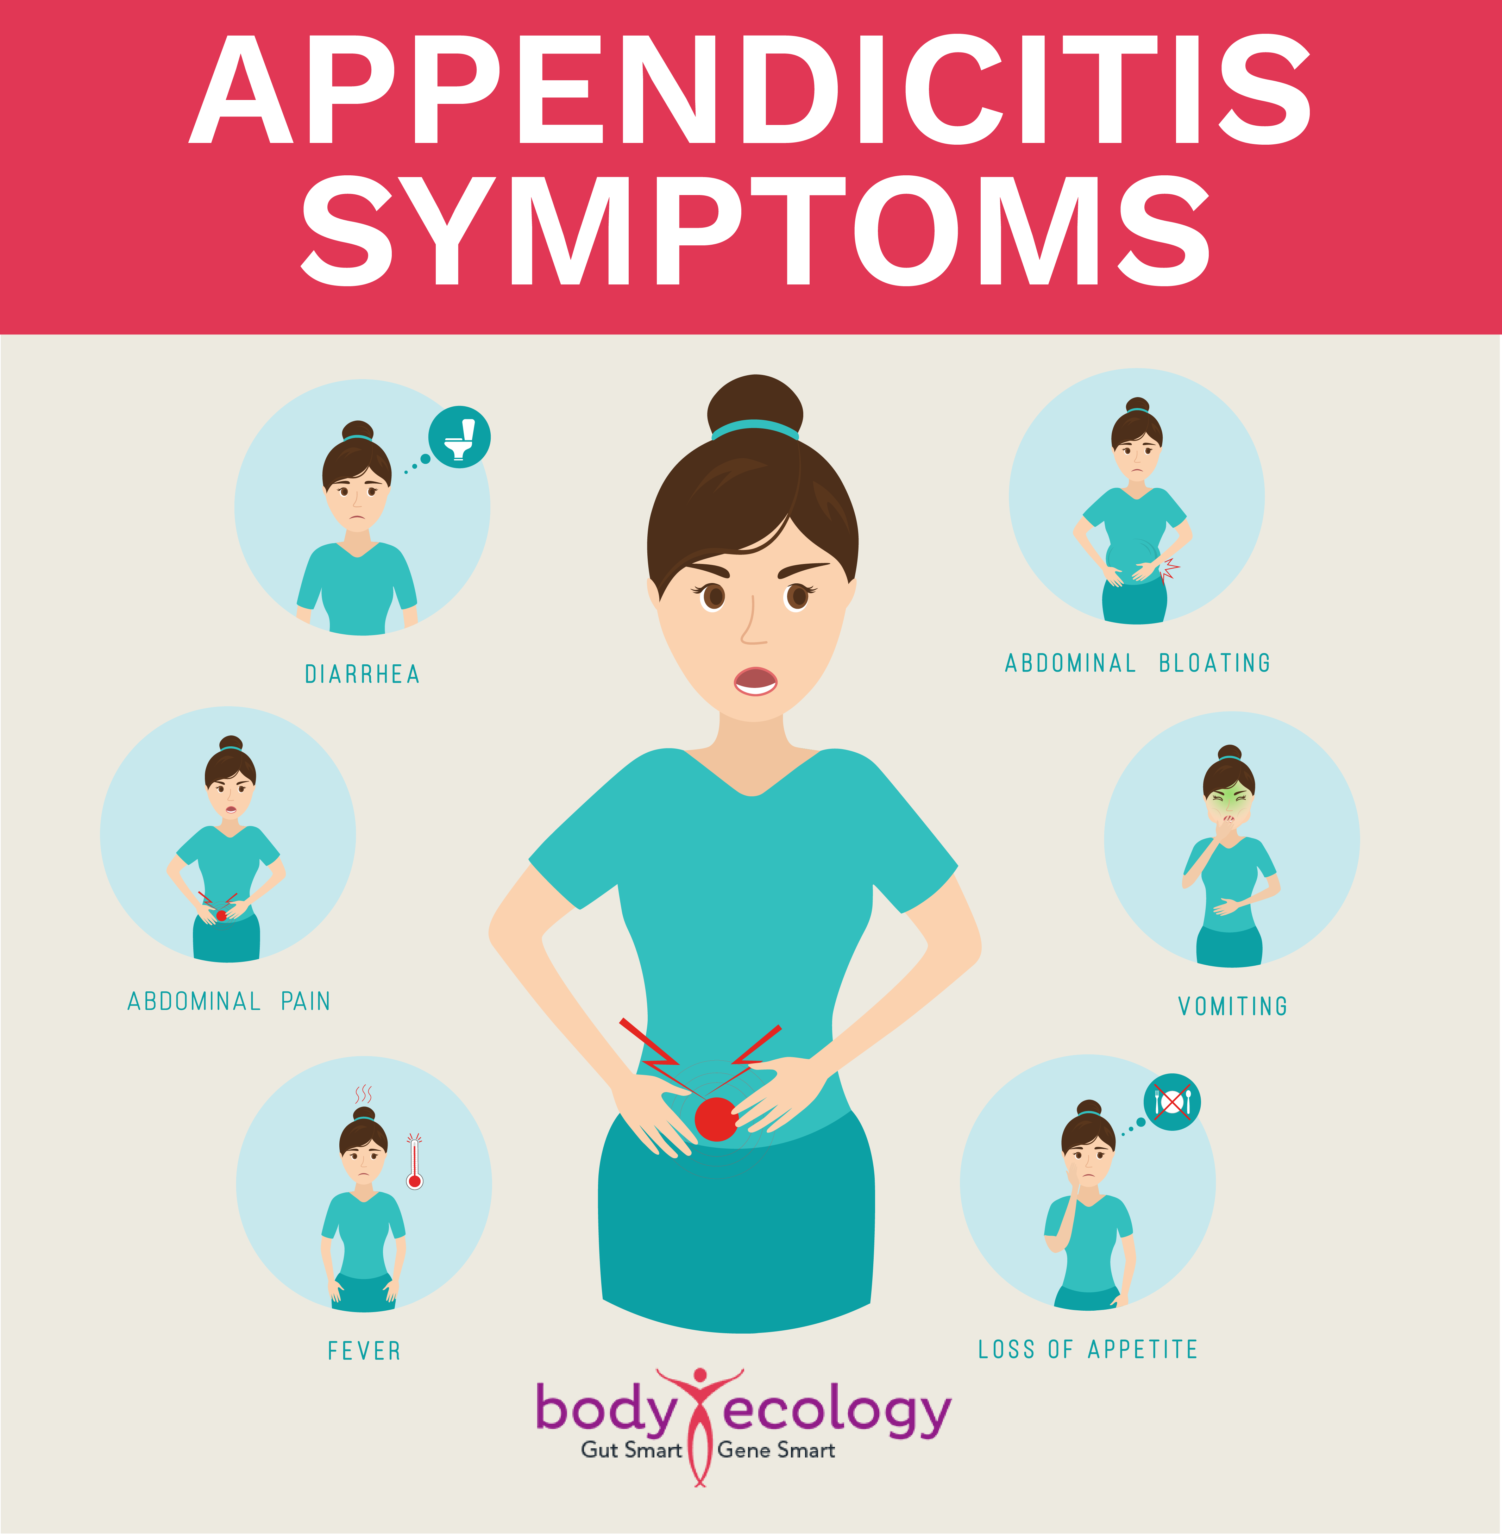 AppendixSYMPTOMS 01 1502x1536 